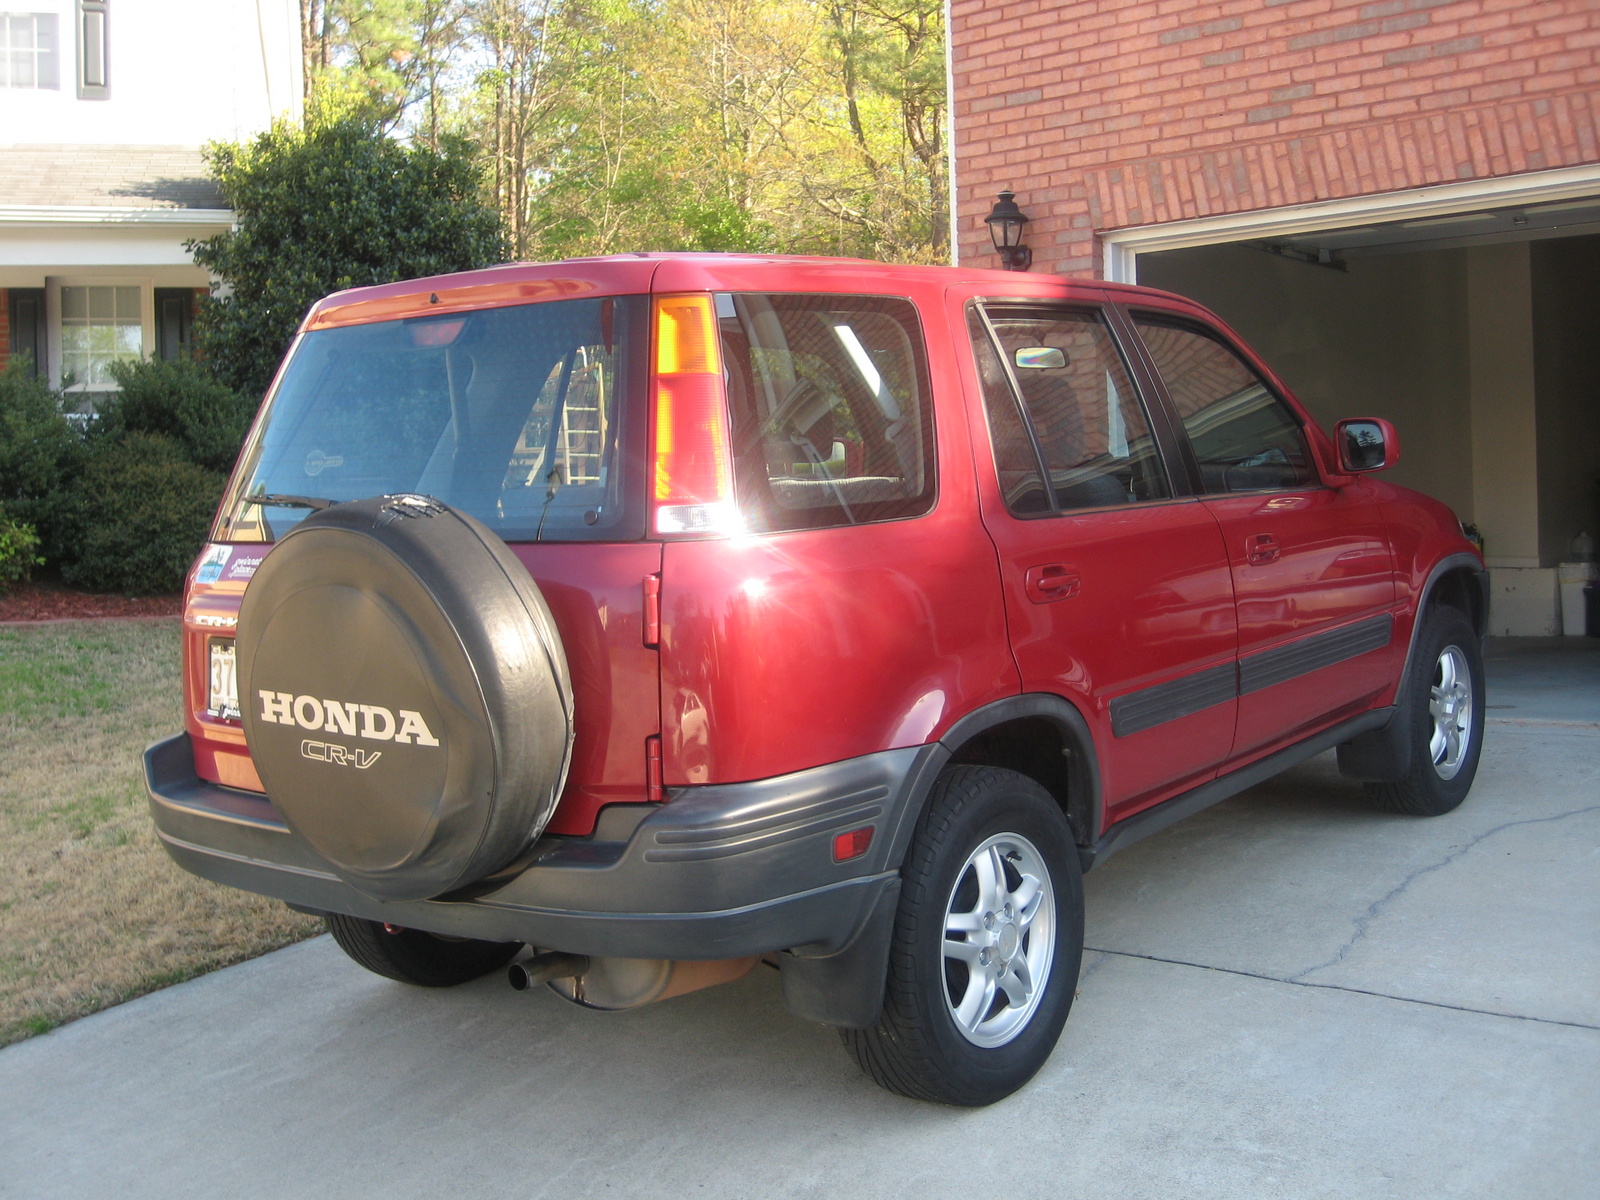 Хонда црв 2000 года. Honda CR-V 1998. Хонда CRV 1998. Хонда СРВ 1998. Honda CRV 1998 года.